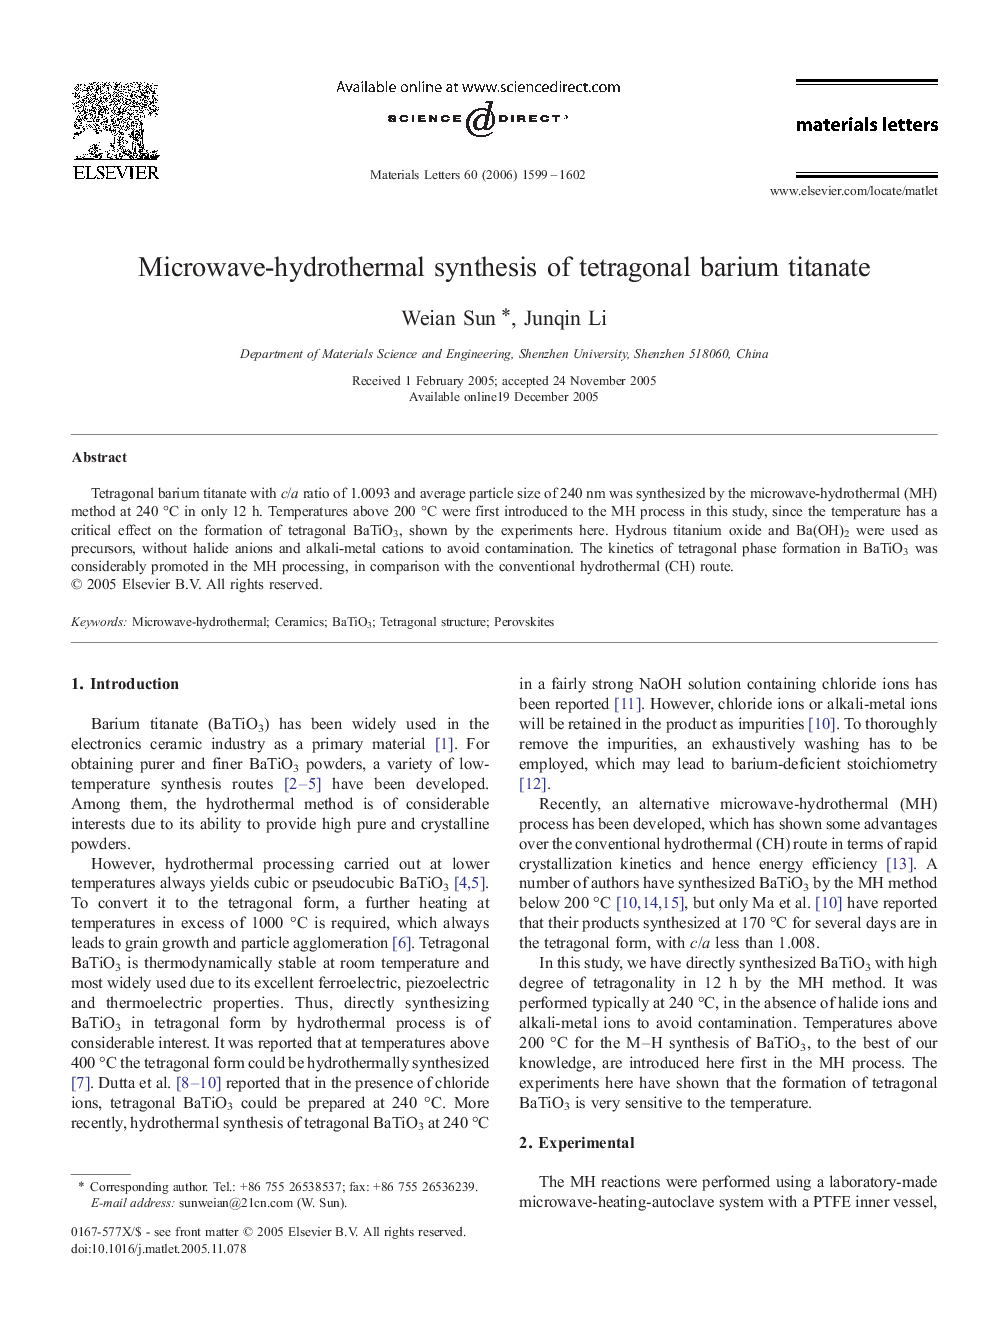 Microwave-hydrothermal synthesis of tetragonal barium titanate